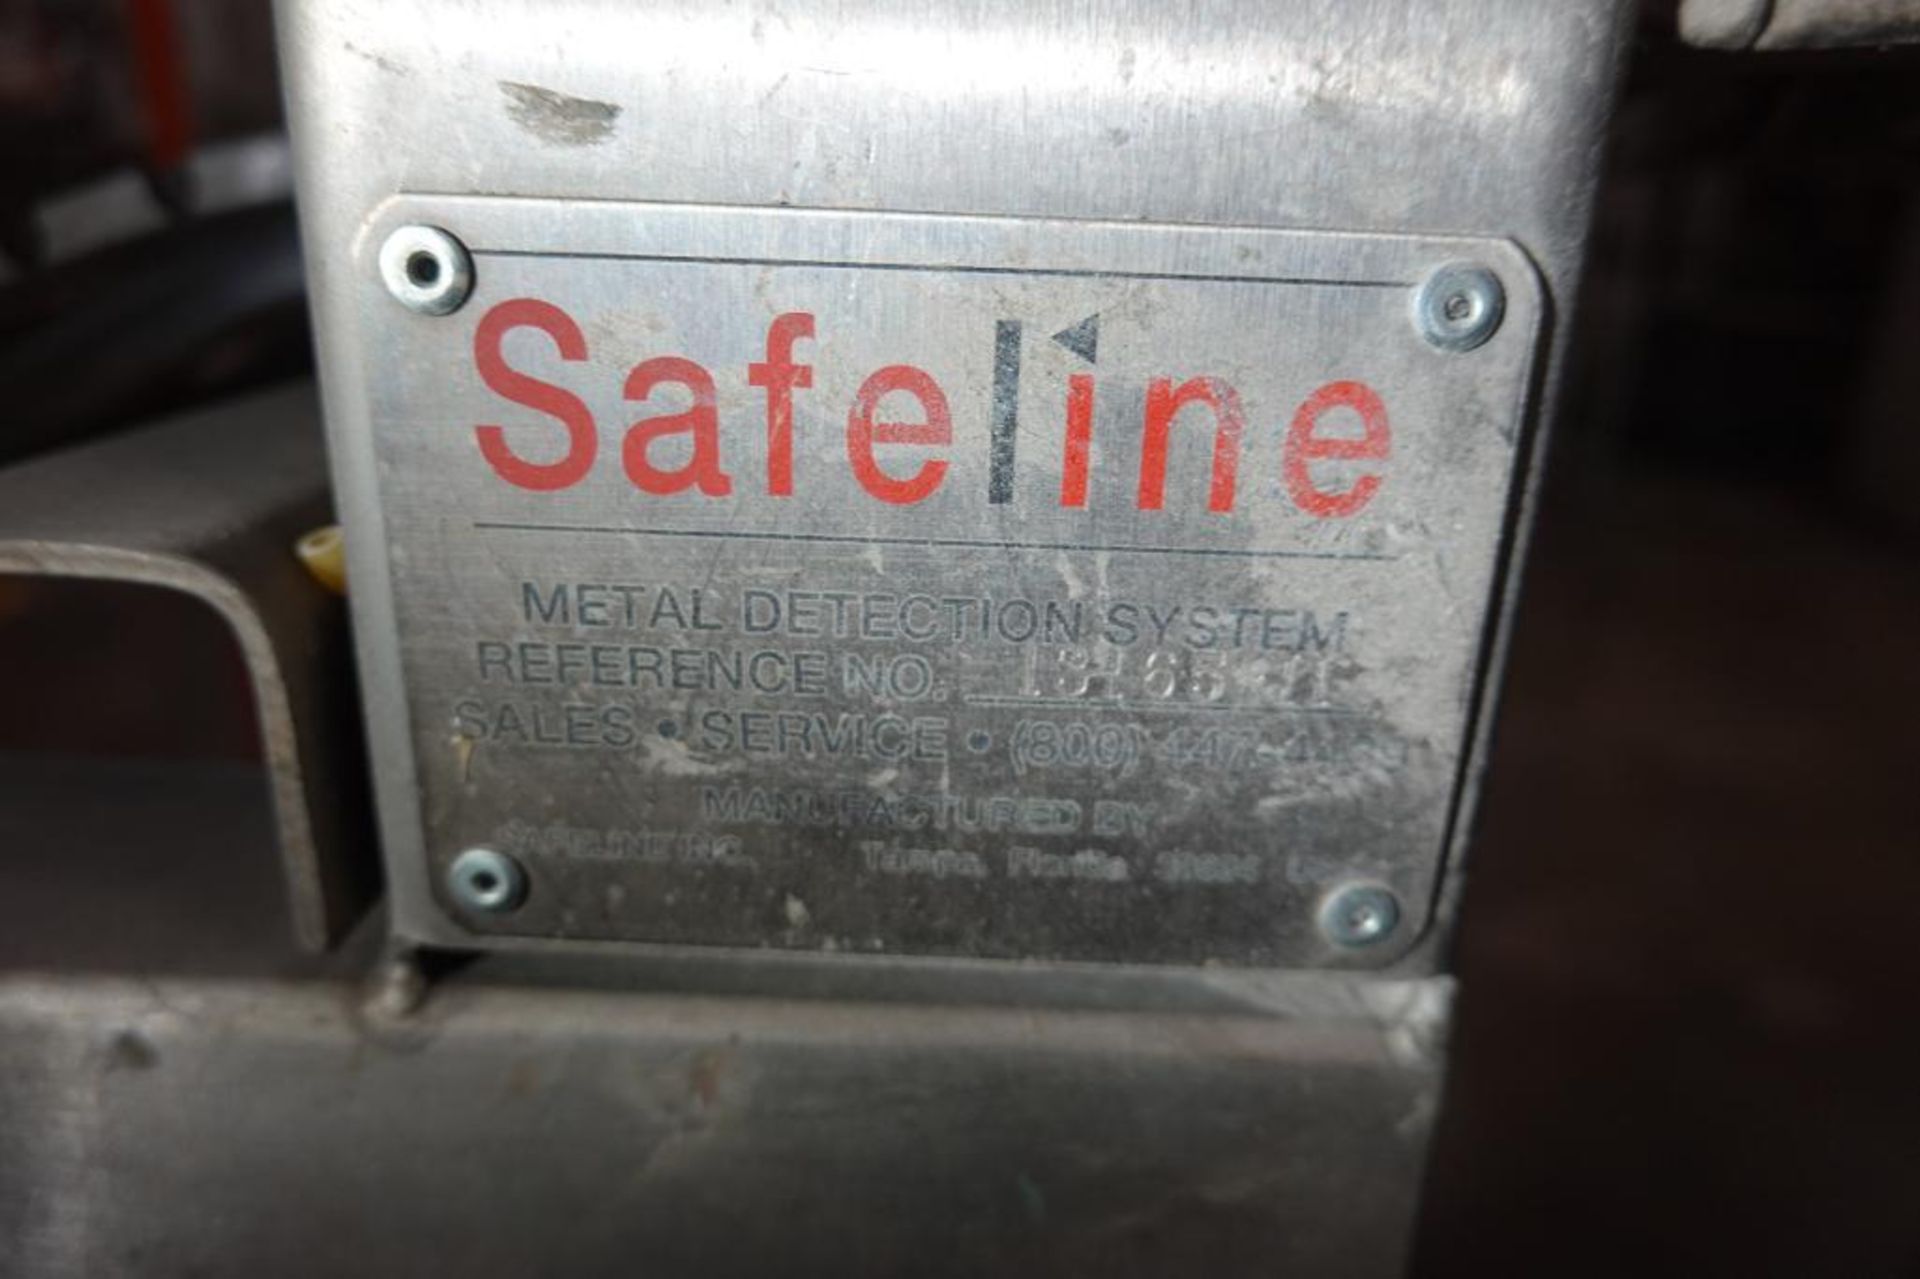 Safeline metal detector with conveyor - Image 11 of 12